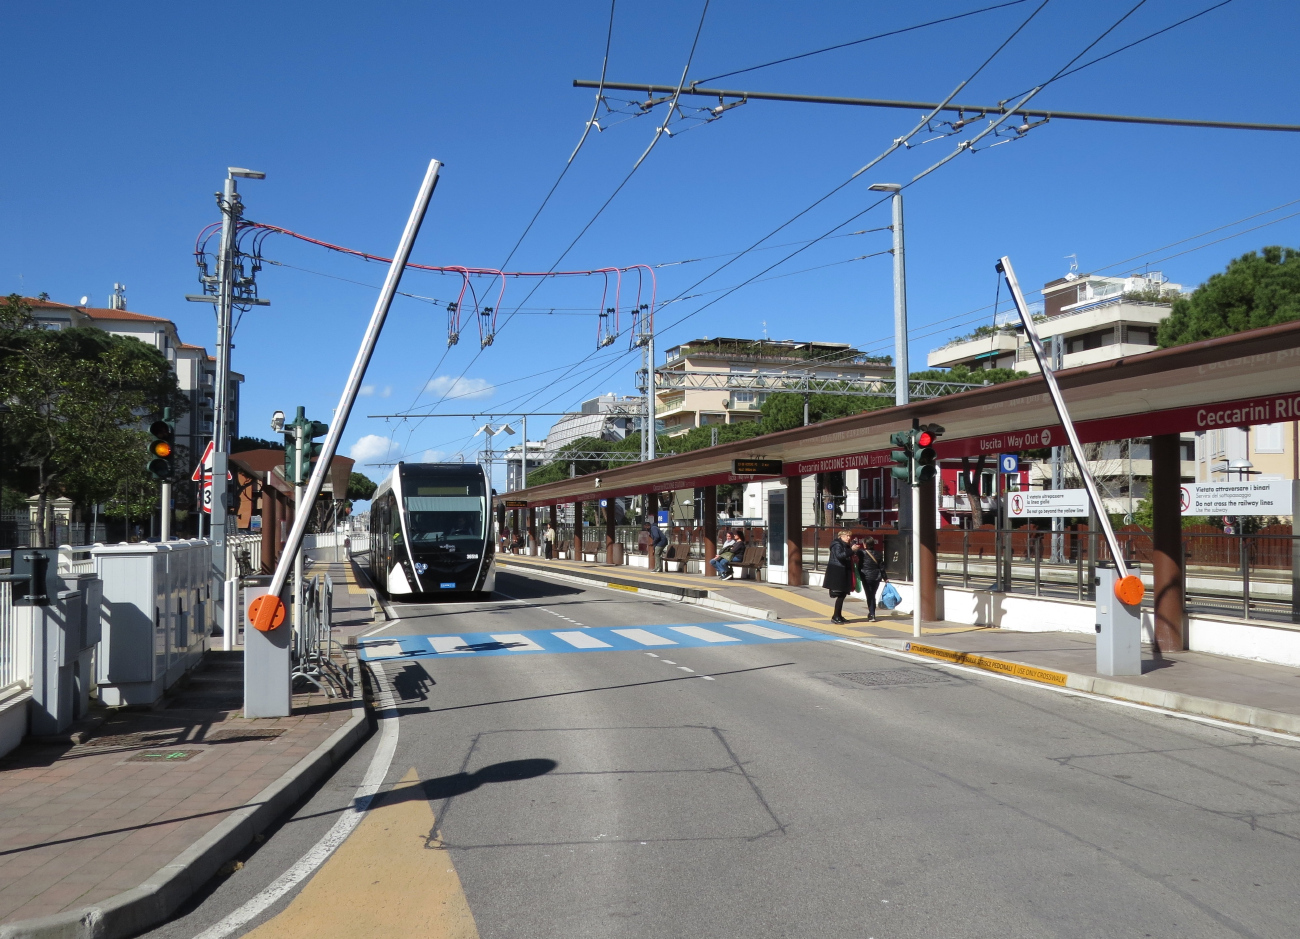 Римини — Инфраструктура линии скоростного троллейбуса Metromare